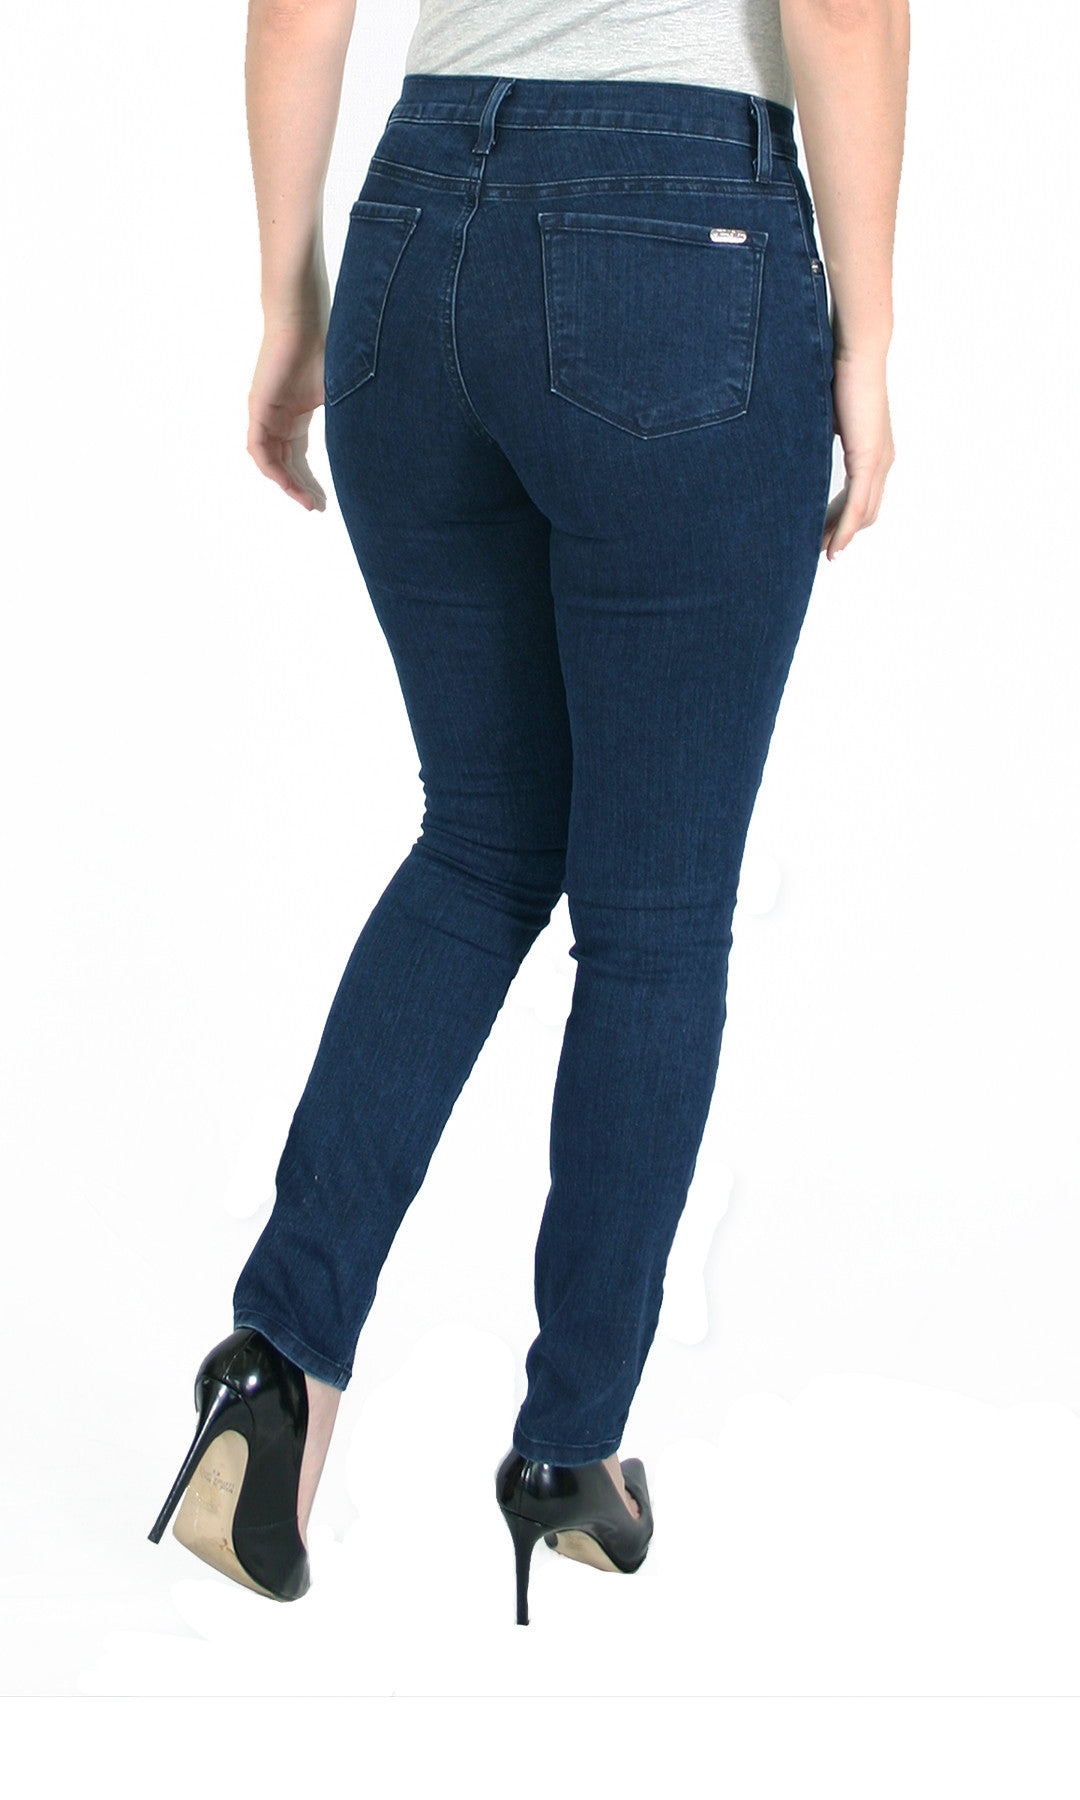 J. METHOD Women's Skinny Pants Soft Everyday Solid Color Basic Slim Tight  Fit Stretch Legging Jeggings Jeans NEWP77 Dark Teal M 